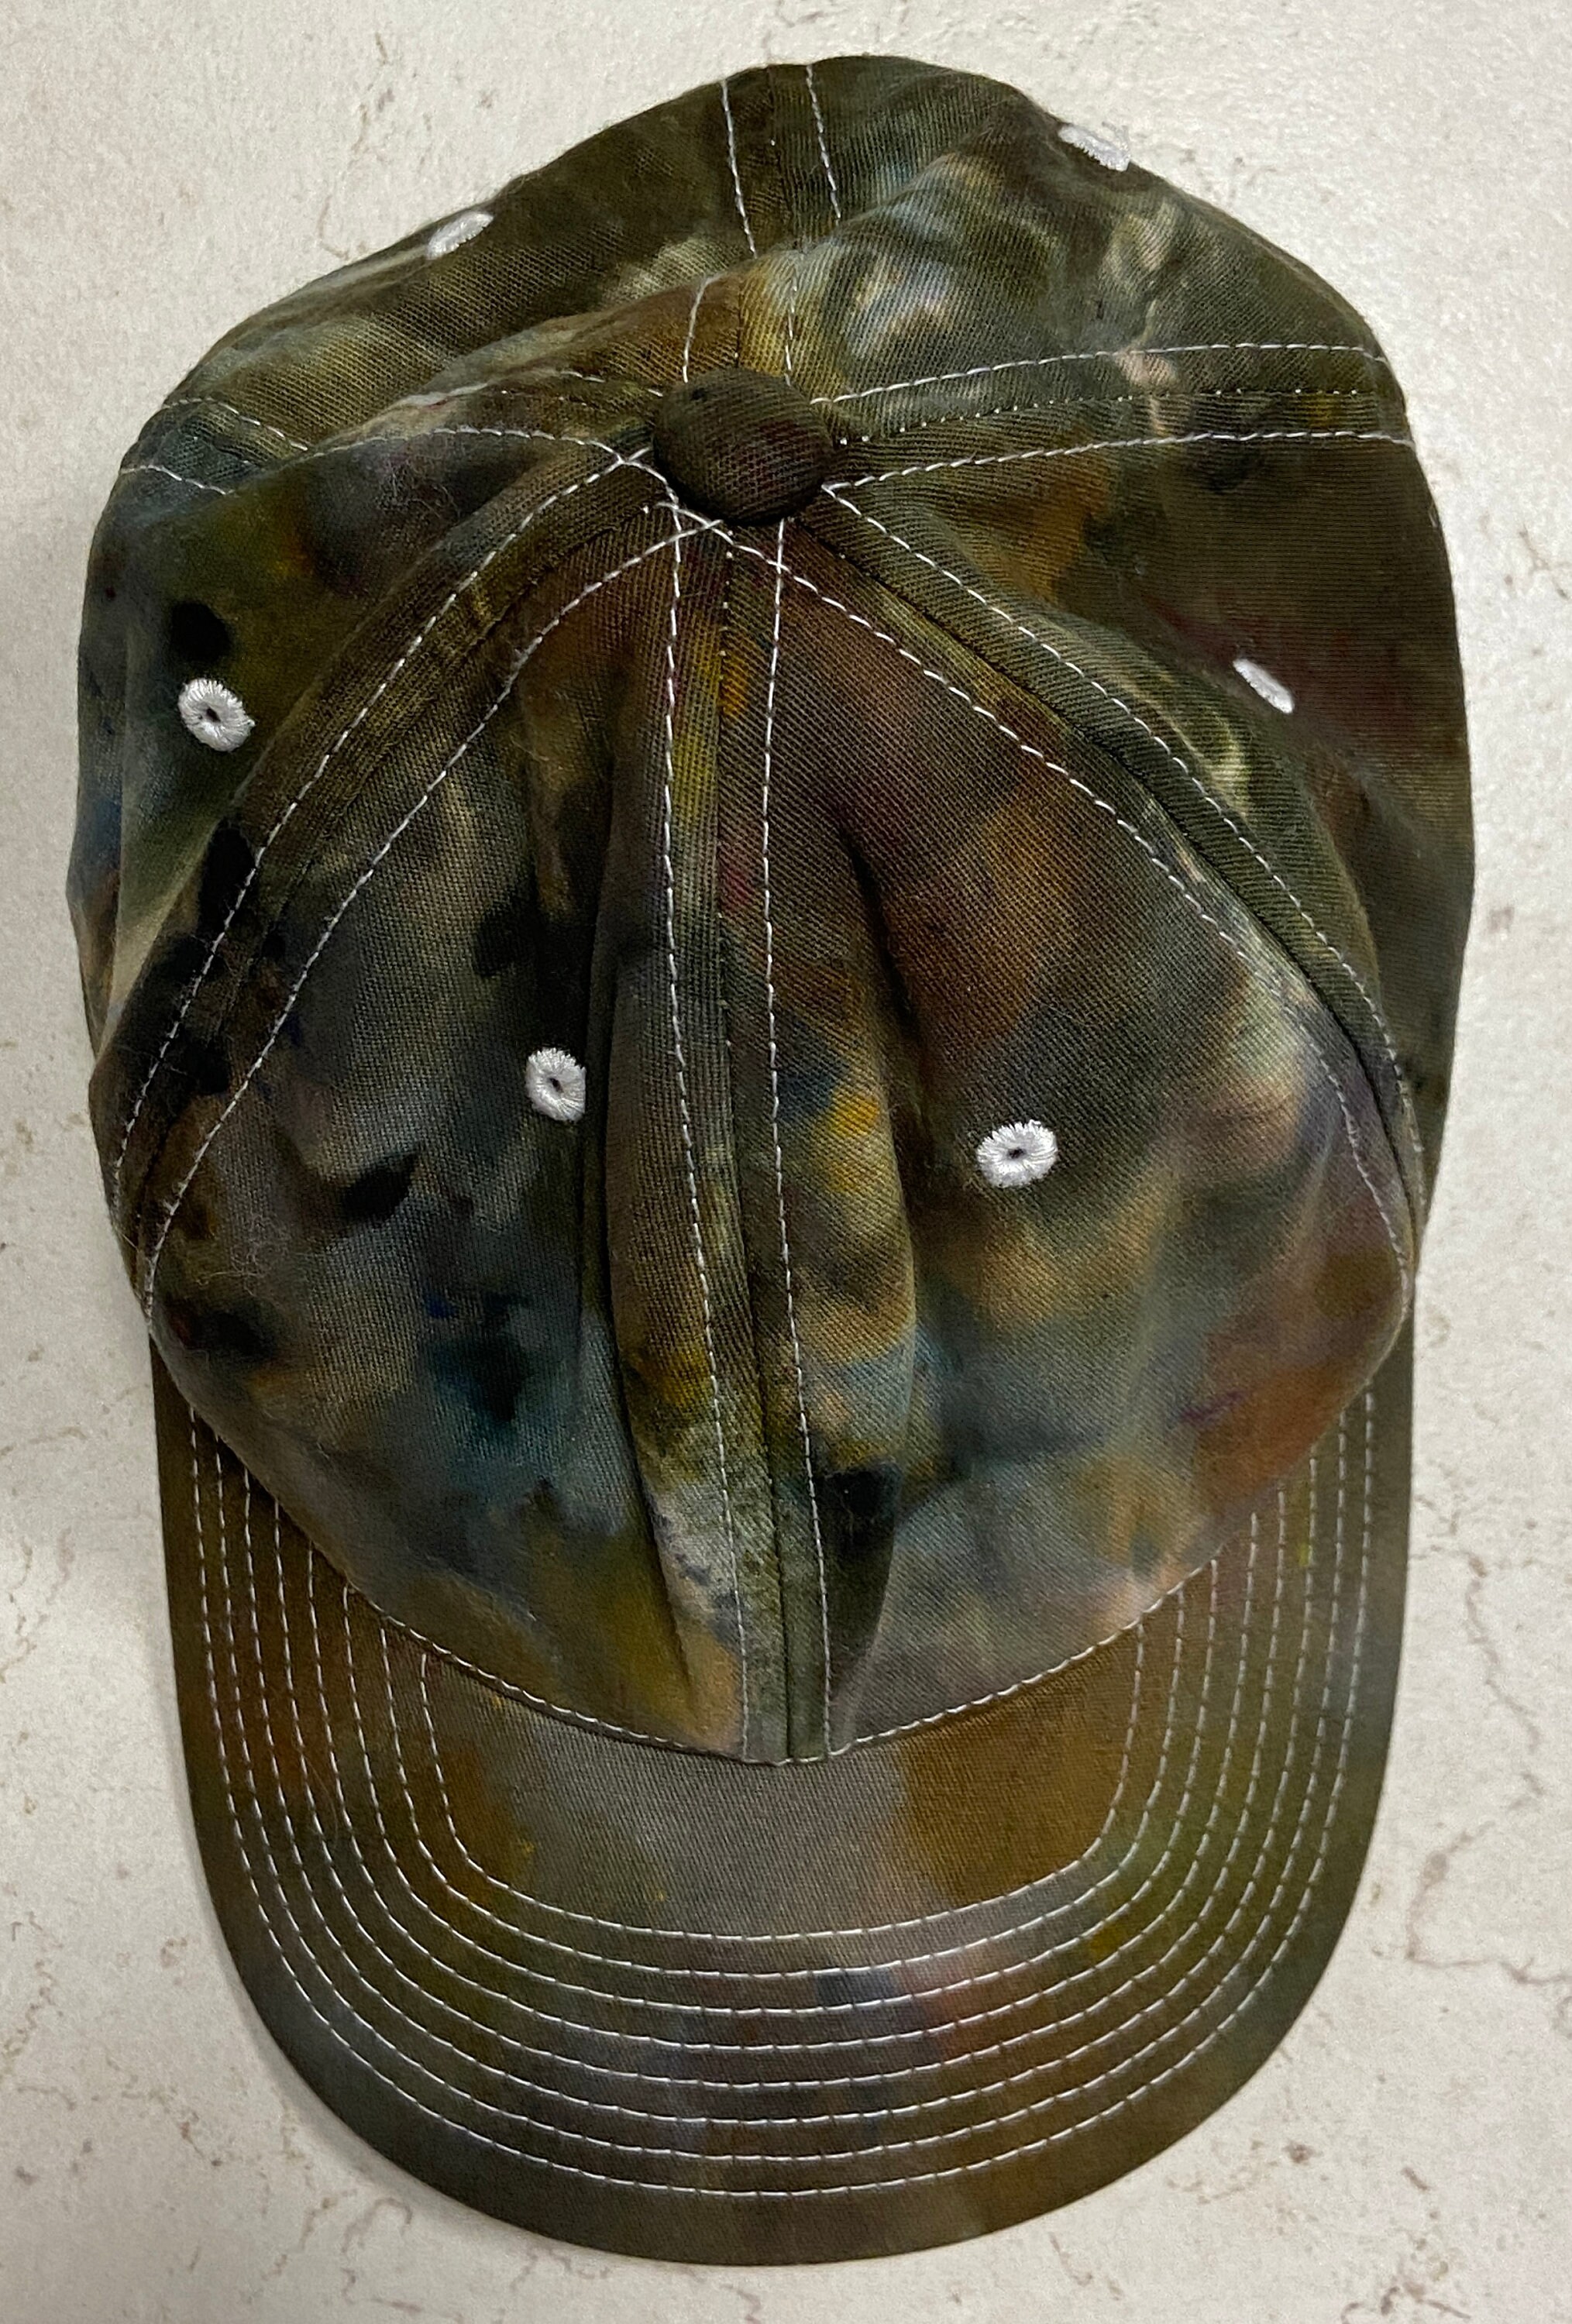 Flexfit S/M Hat size 6 3/4-7 1/4 Cap Ballcap Tie Dye-style Camo  Camouflage-mid Profile Cotton Structured Hat W/ Spandex Sweat Band ma42 -  Etsy